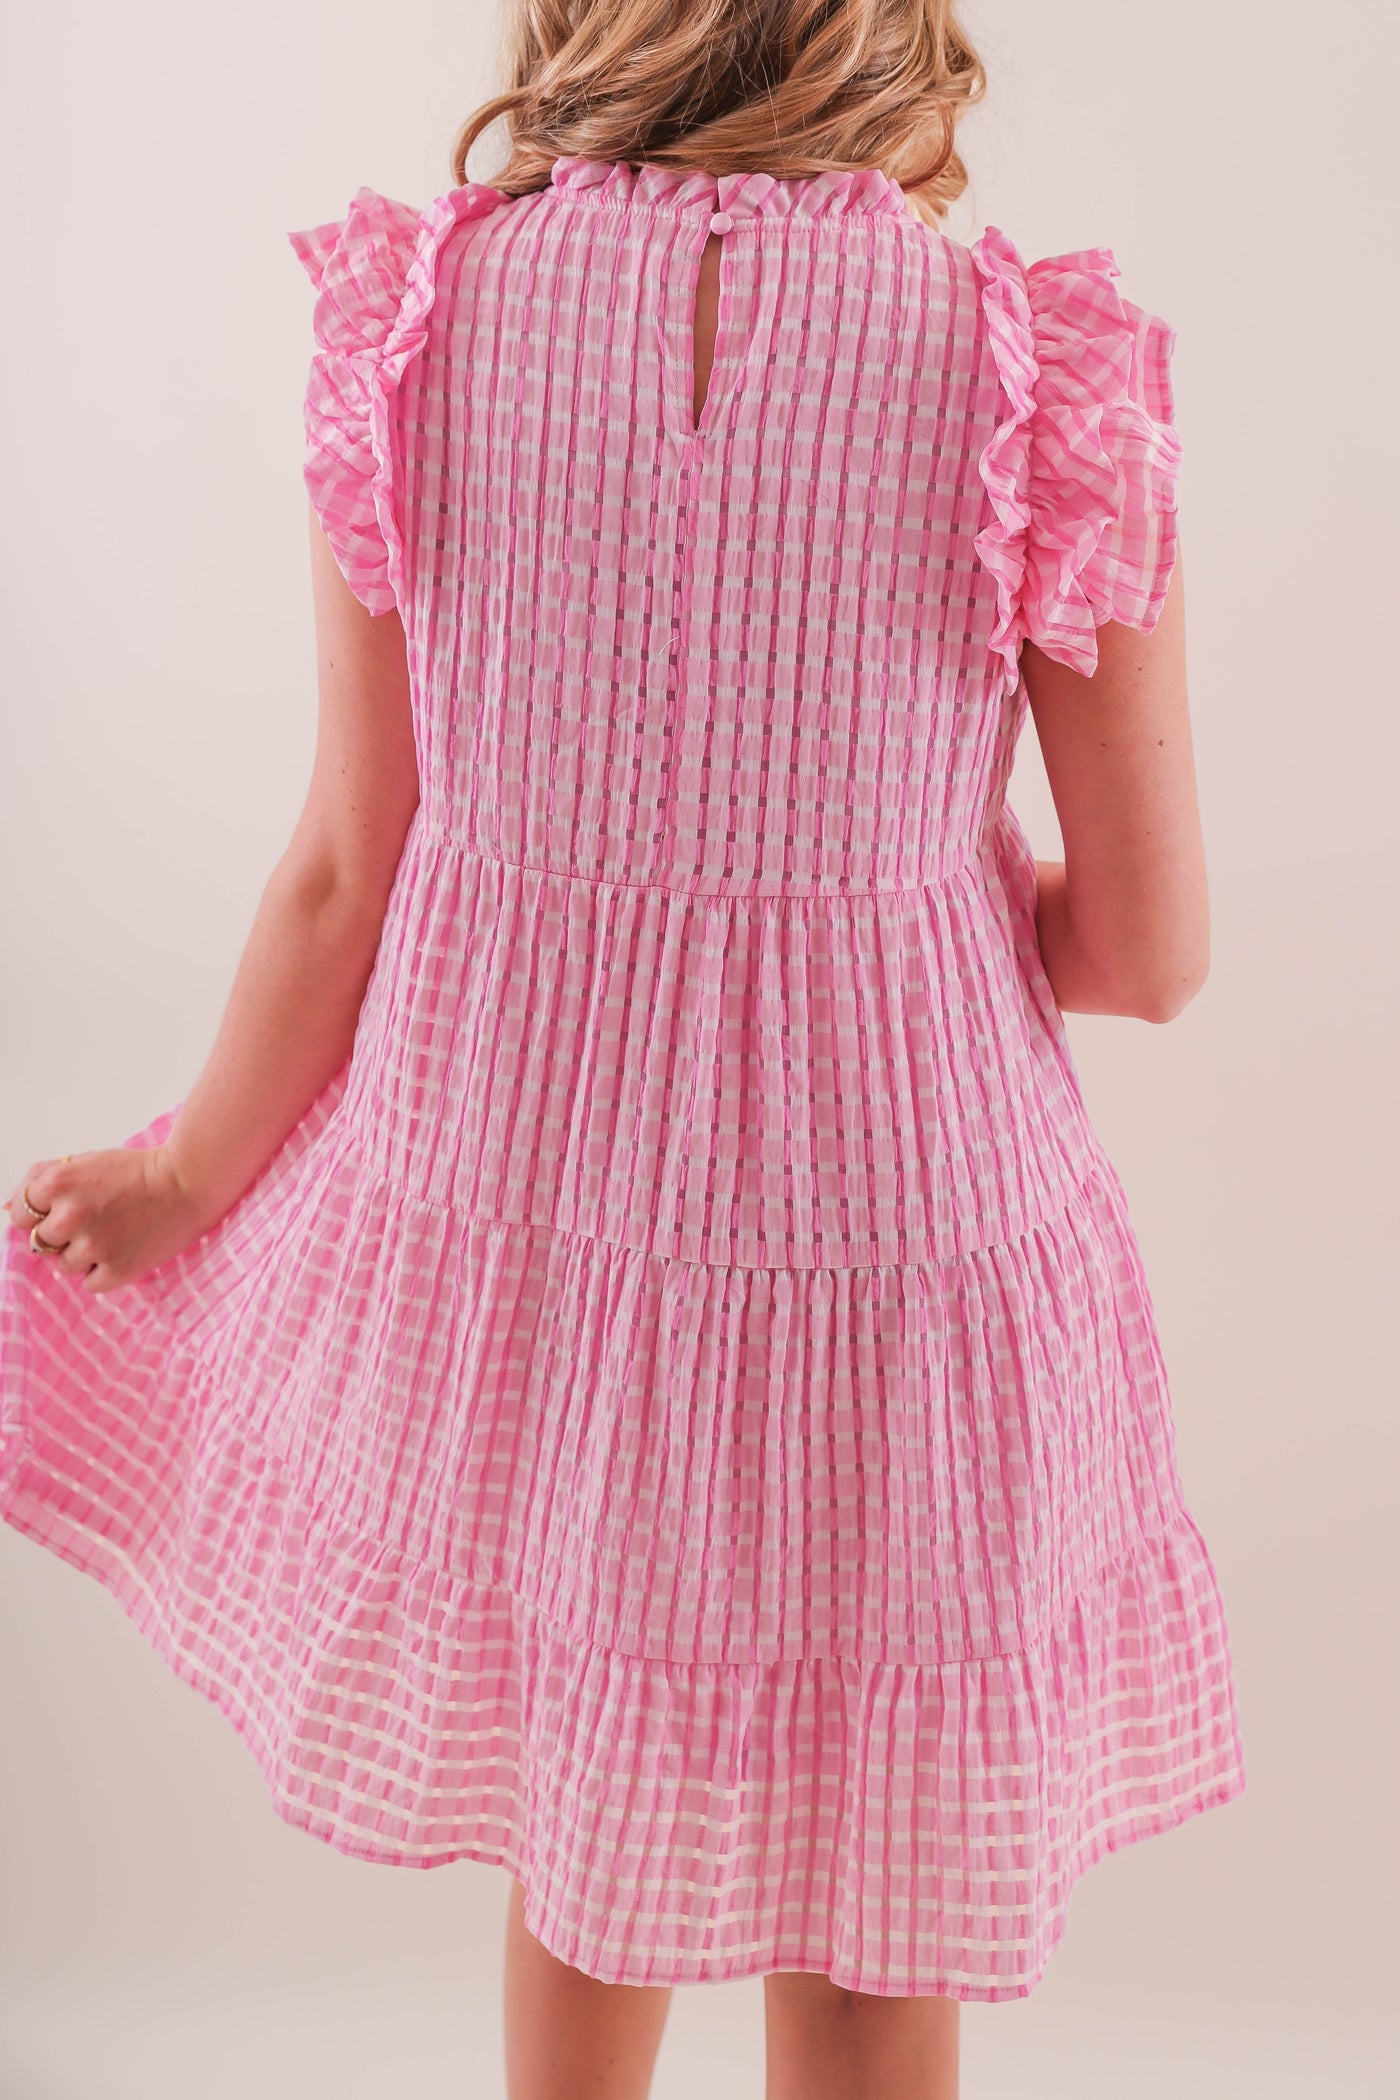 Women's Pink Gingham Dress- Women's Pink and White Seersucker Dress- Entro Dresses